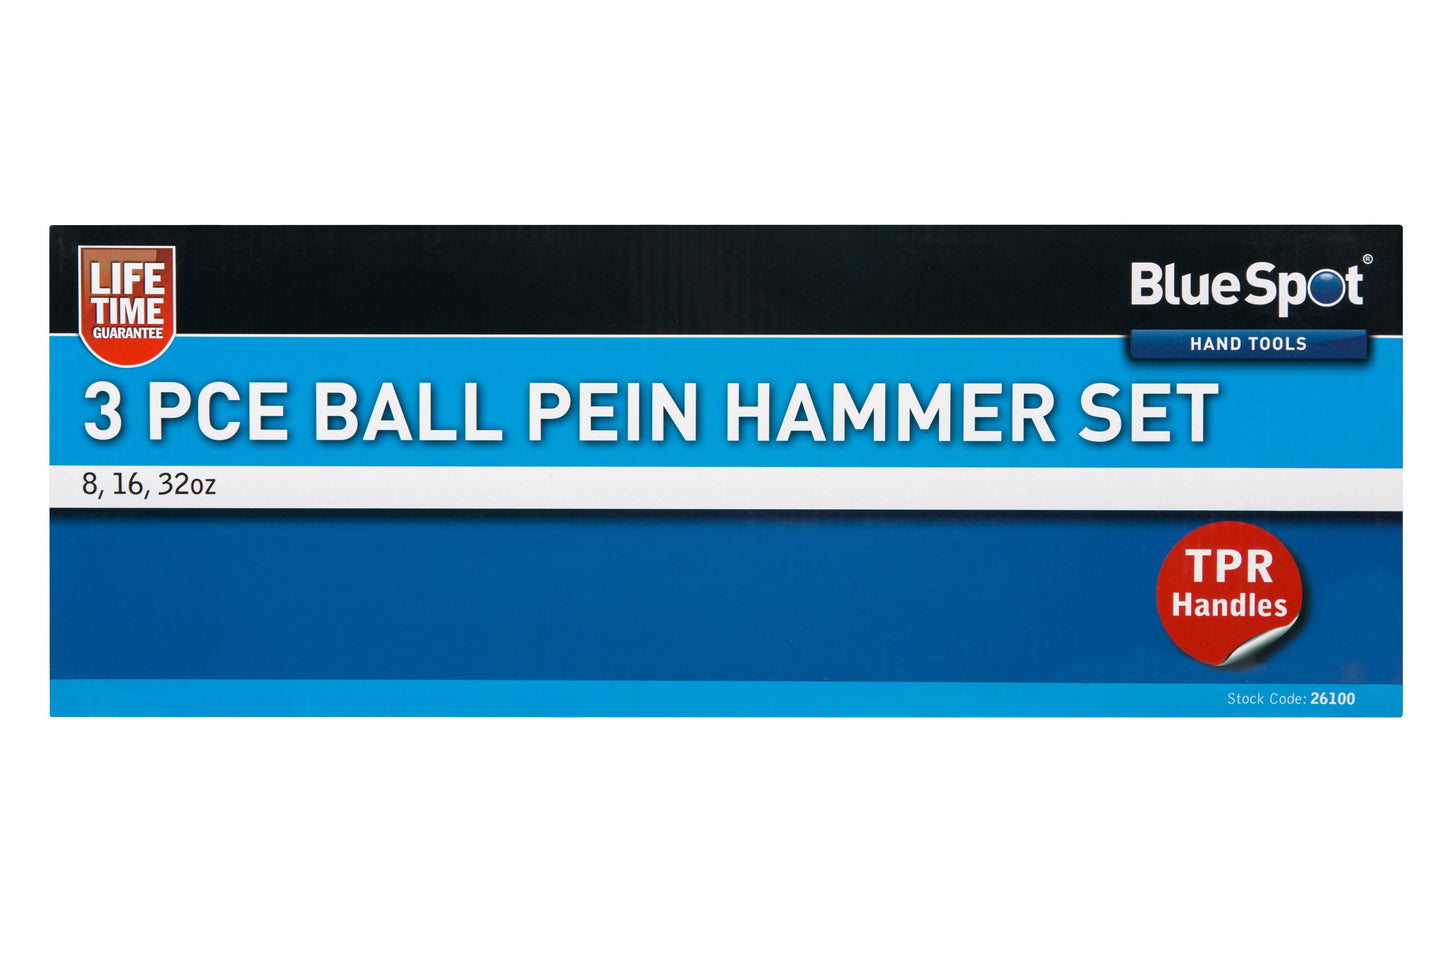 3 PCE BALL PEIN HAMMER SET